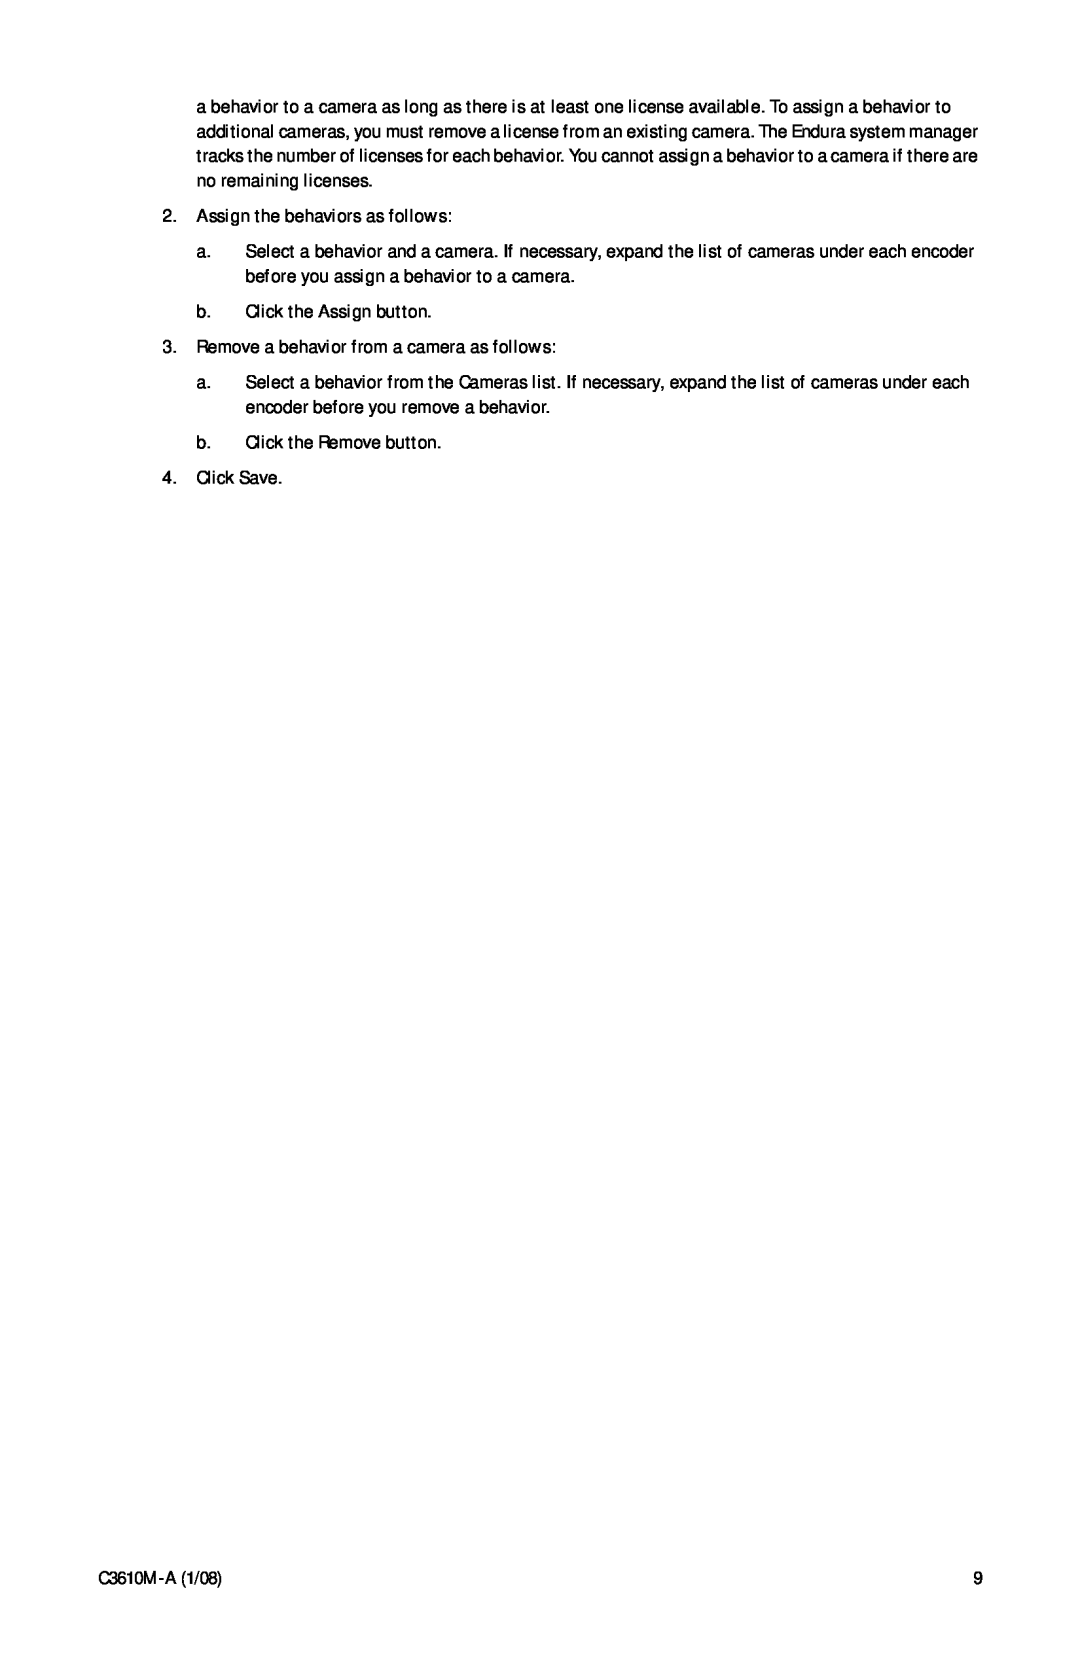 Pelco C3610m-a(1/08) manual Assign the behaviors as follows 